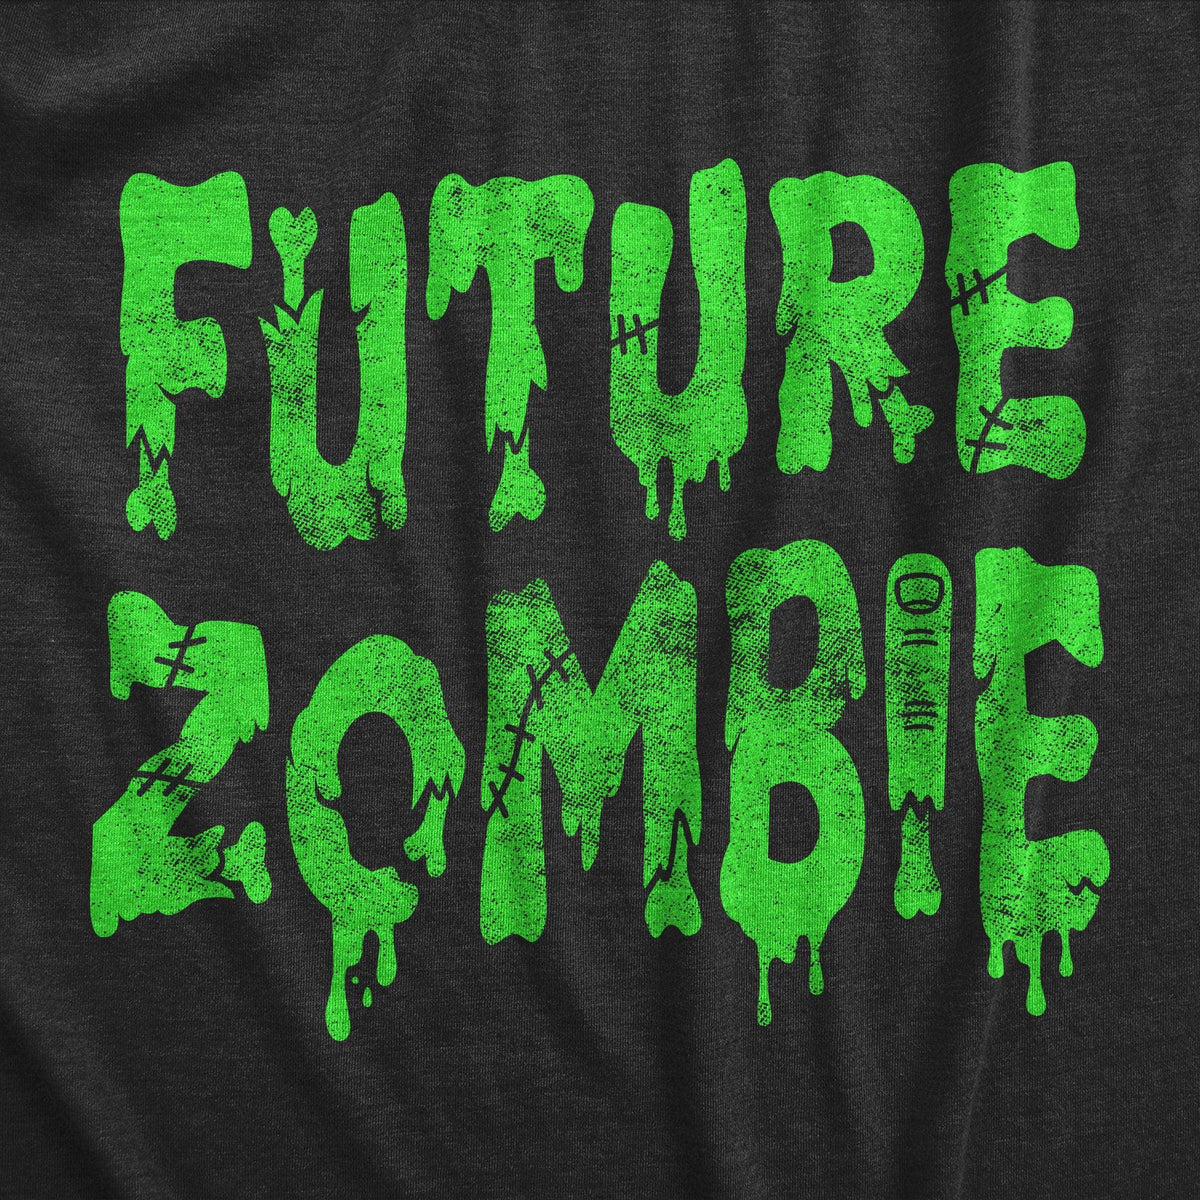 Future Zombie Men&#39;s Tshirt  -  Crazy Dog T-Shirts